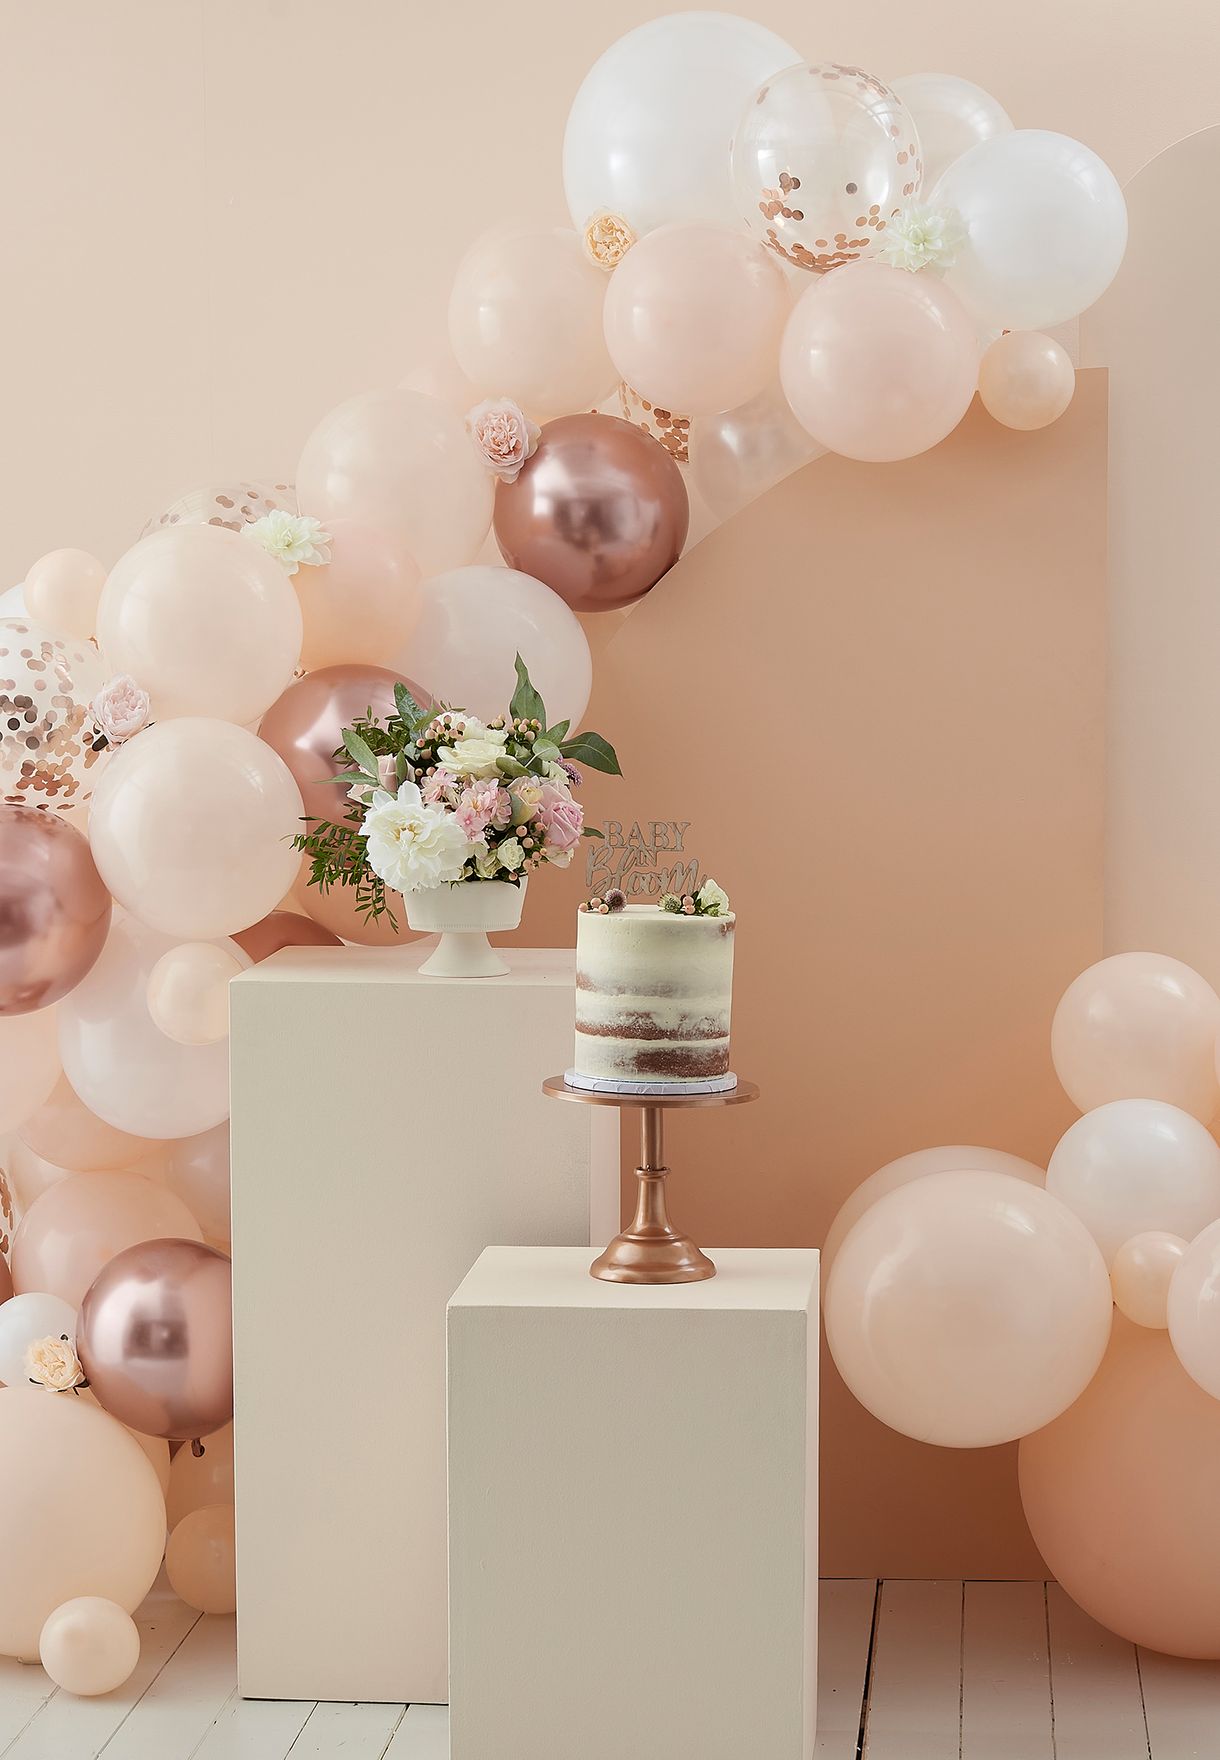 Balloon Arch - Peach, White And Rose Gold Confetti